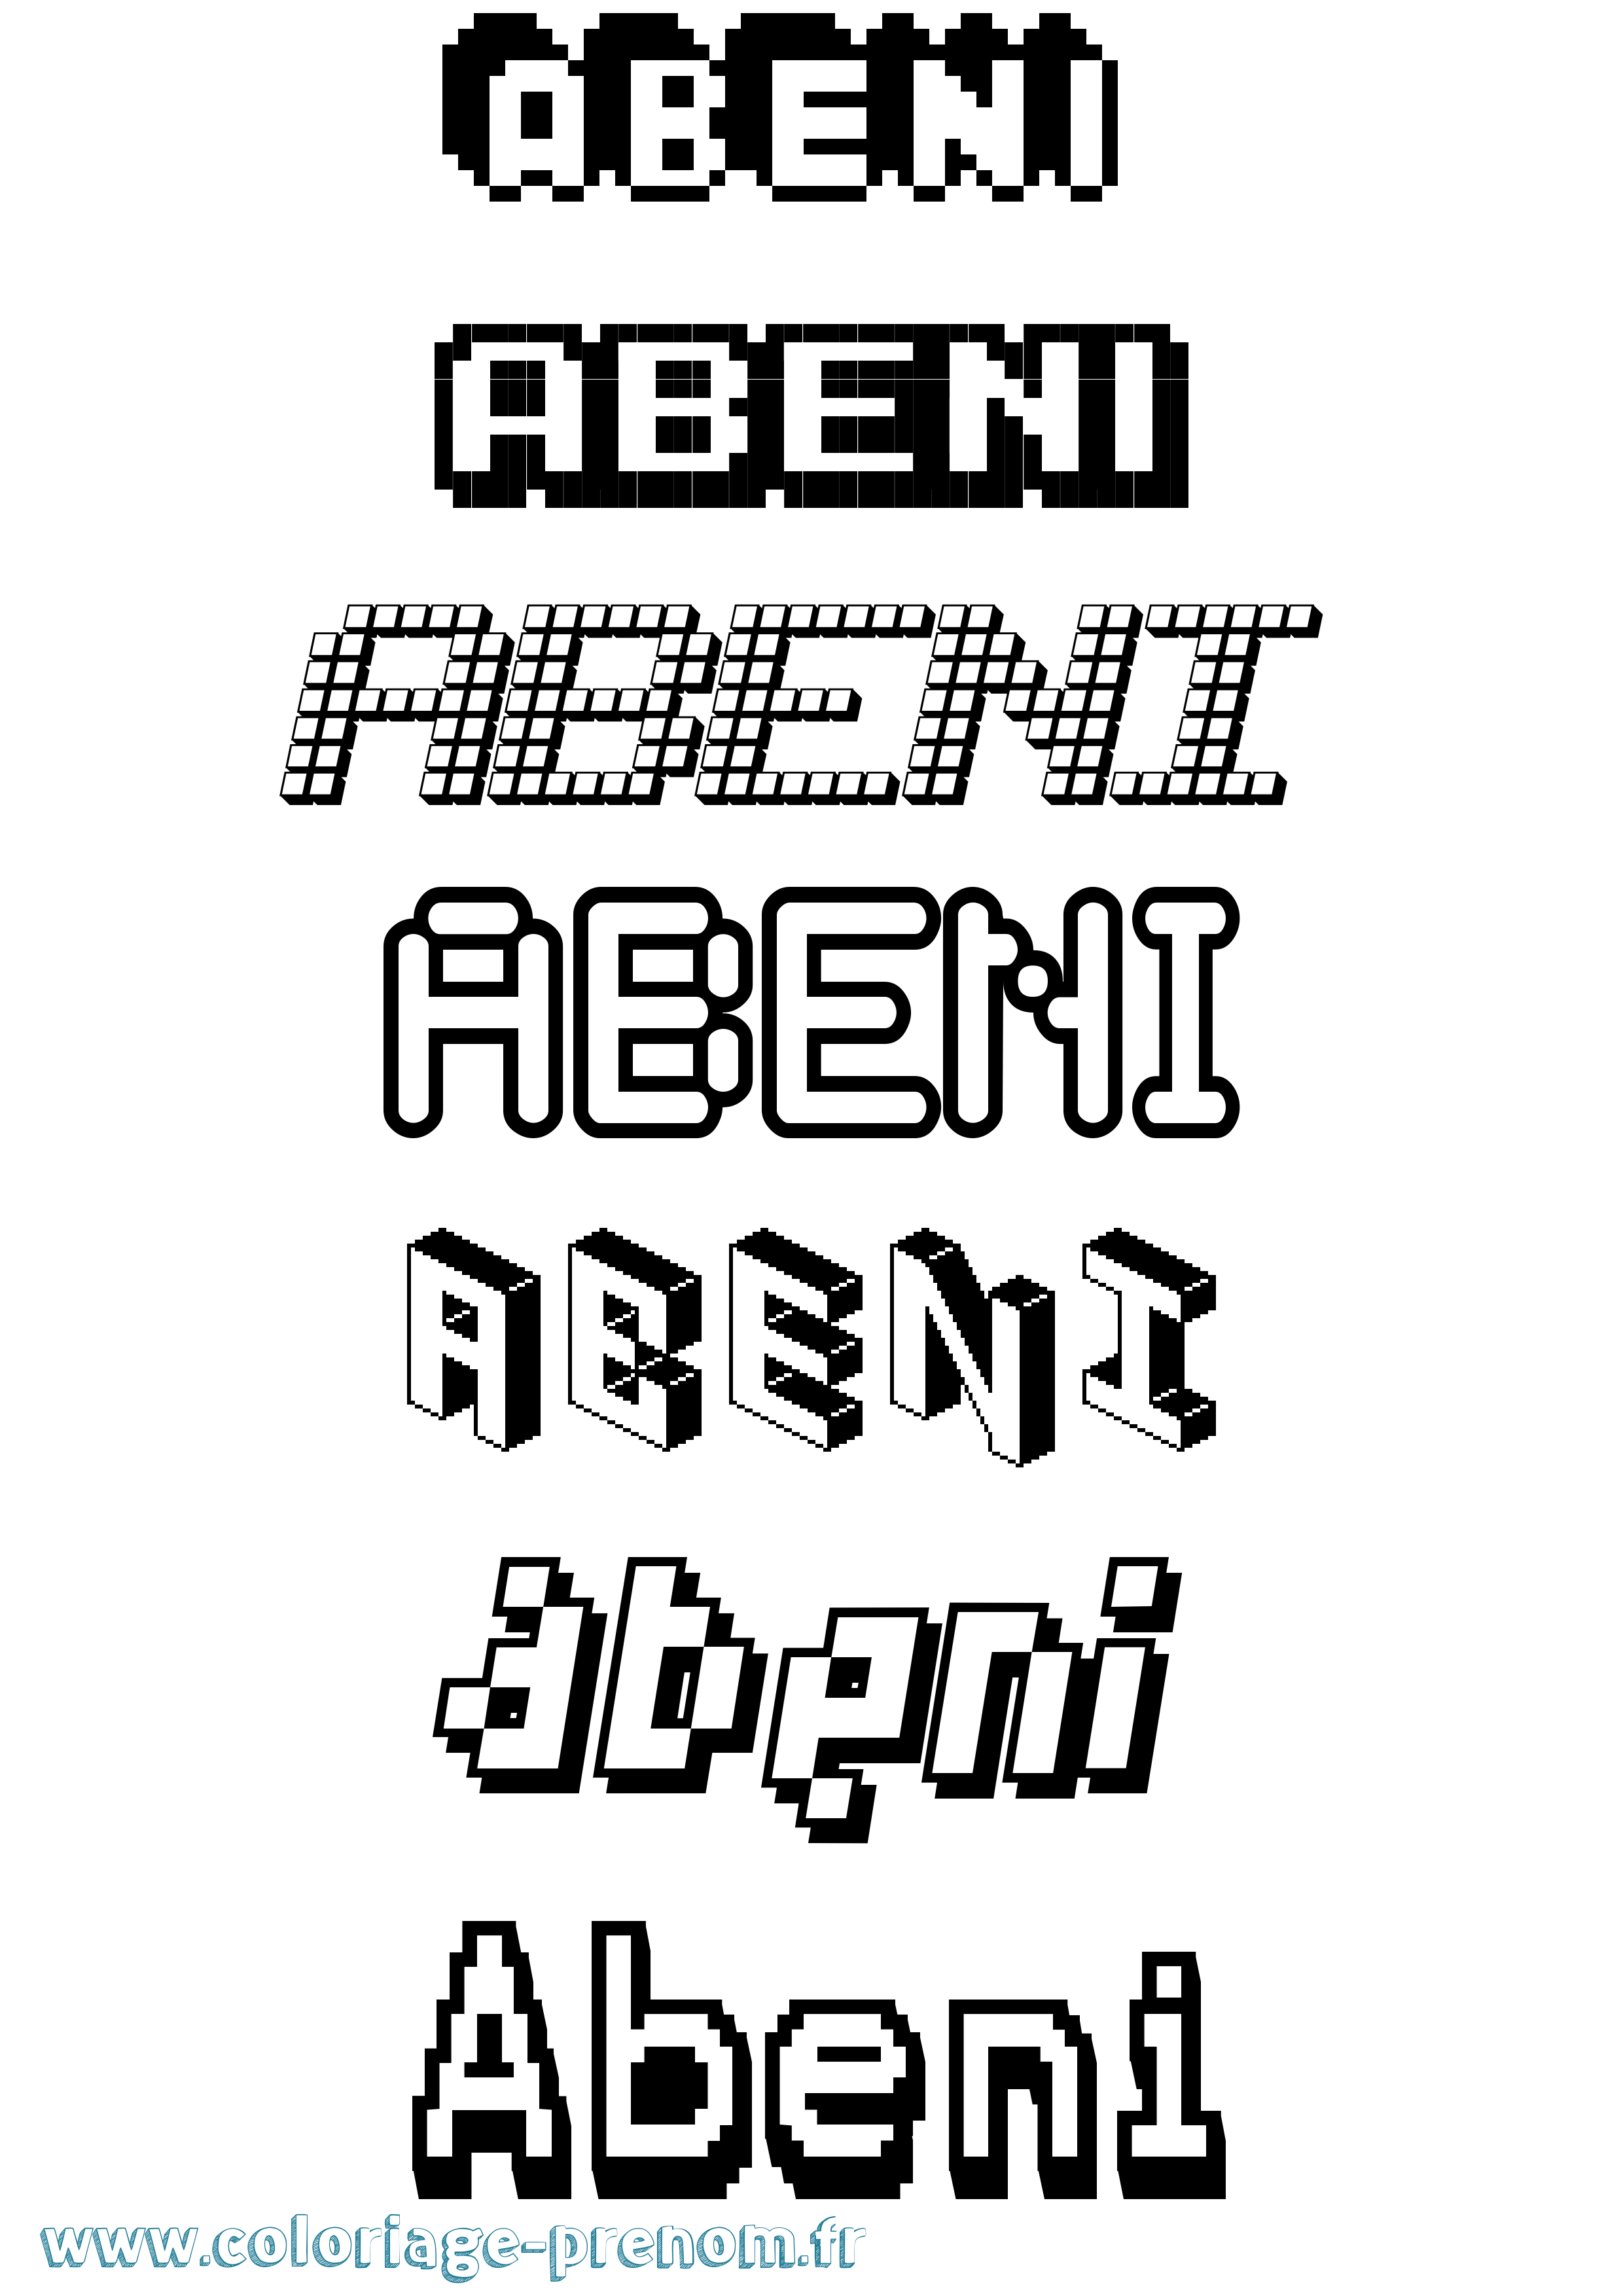 Coloriage prénom Abeni Pixel